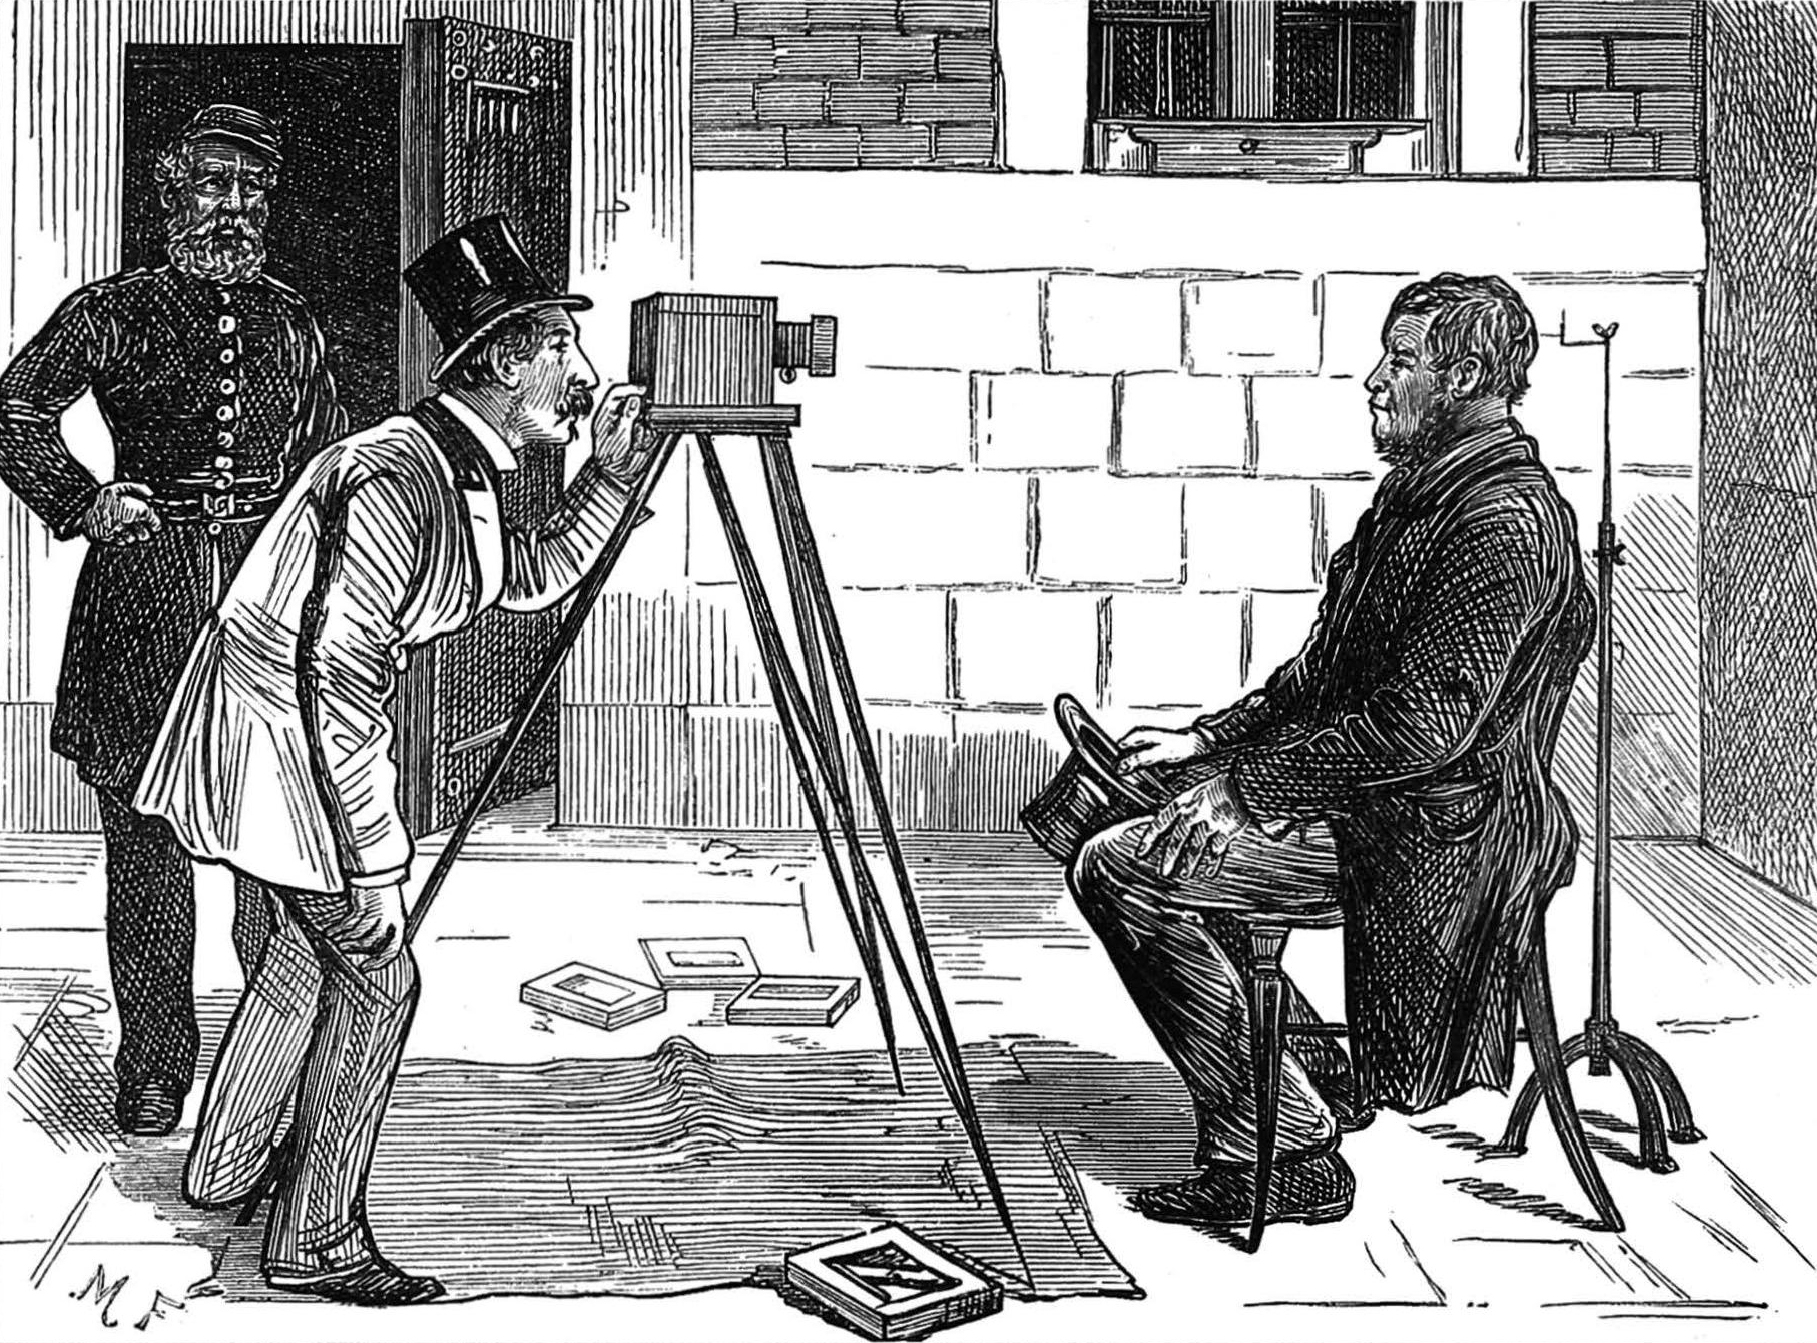 Prisoners having their mug shots taken (from
          The Illustrated London News at TheGenealogist.co.uk).